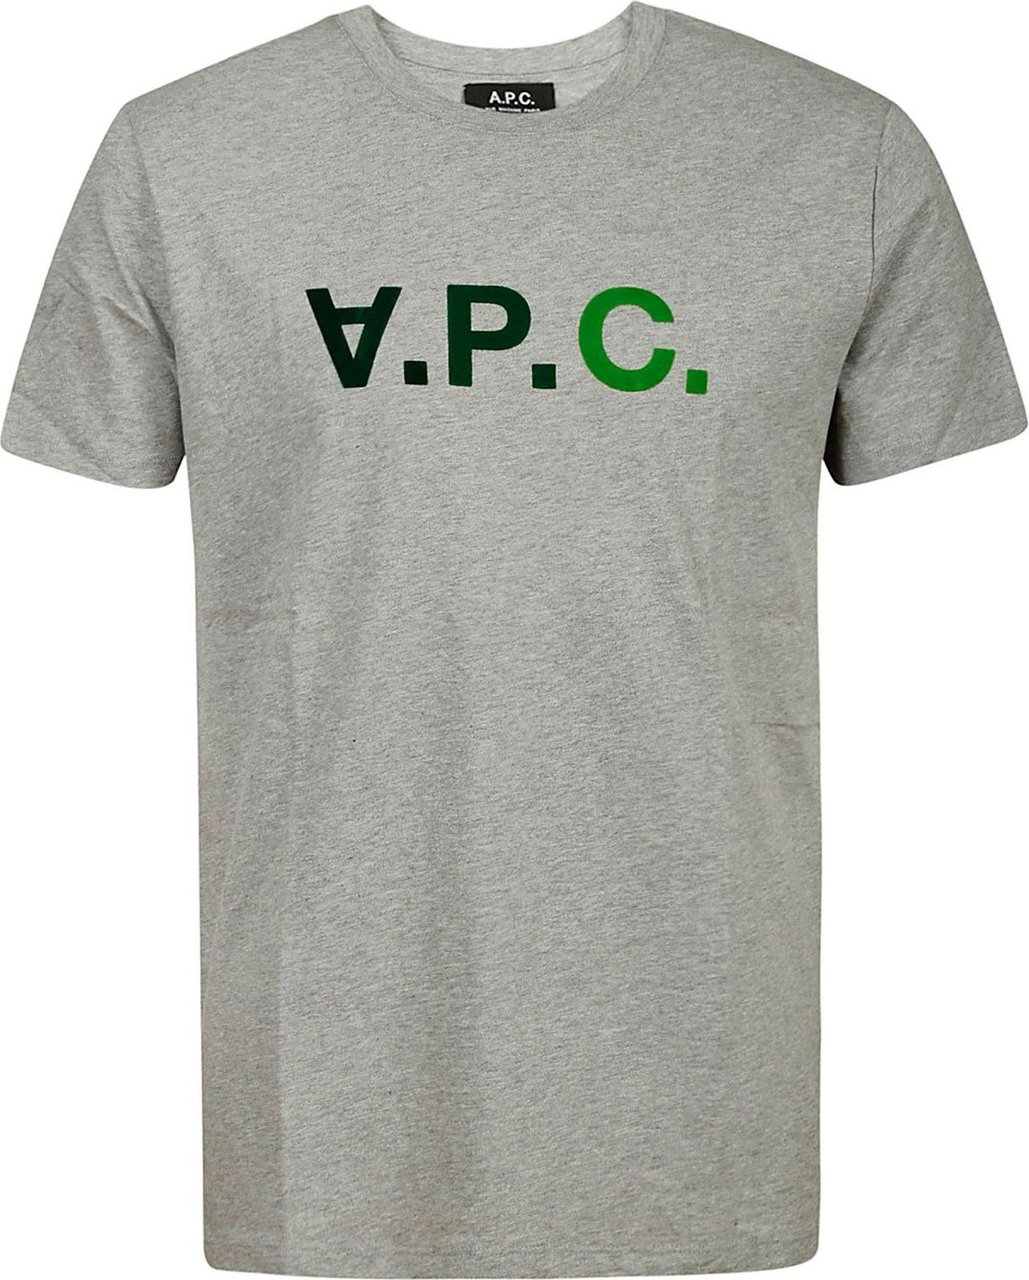 A.P.C. T-shirt Vpc Multicolore H Green Groen